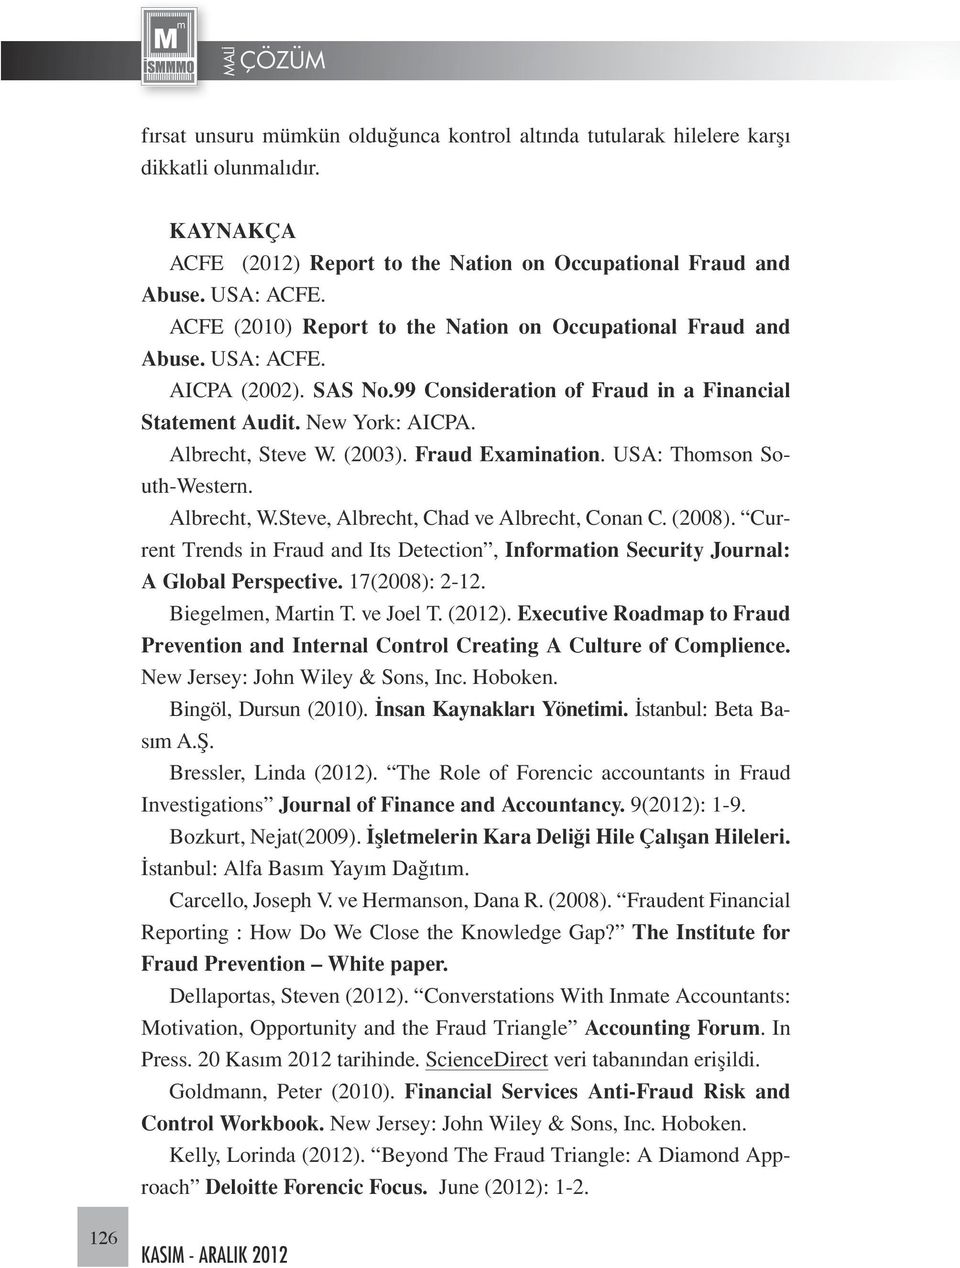 Fraud Examination. USA: Thomson South-Western. Albrecht, W.Steve, Albrecht, Chad ve Albrecht, Conan C. (2008).